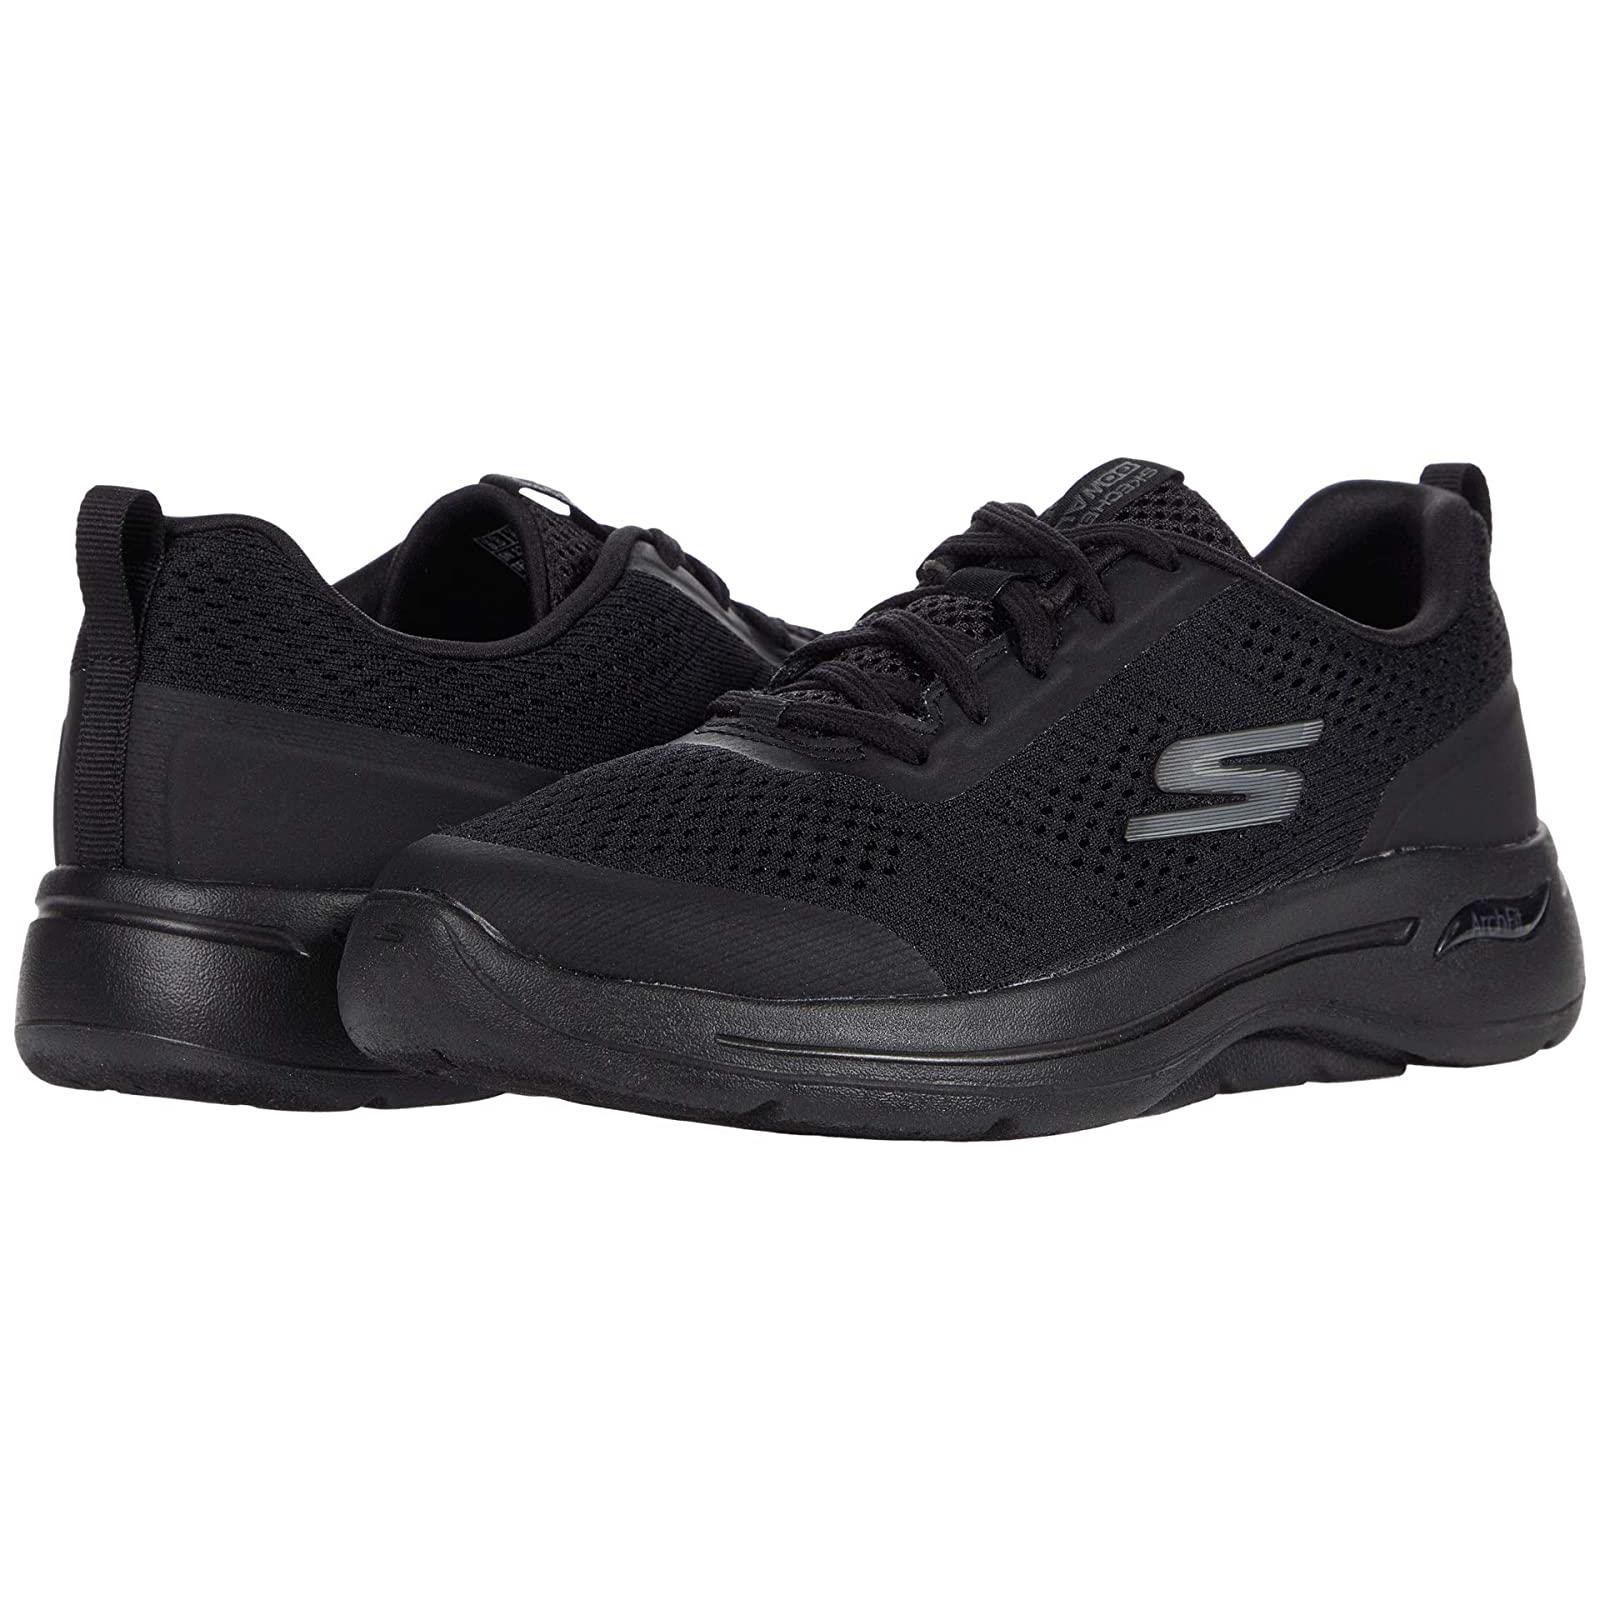 Woman`s Shoes Skechers Performance Go Walk Arch Fit - 124404 Black